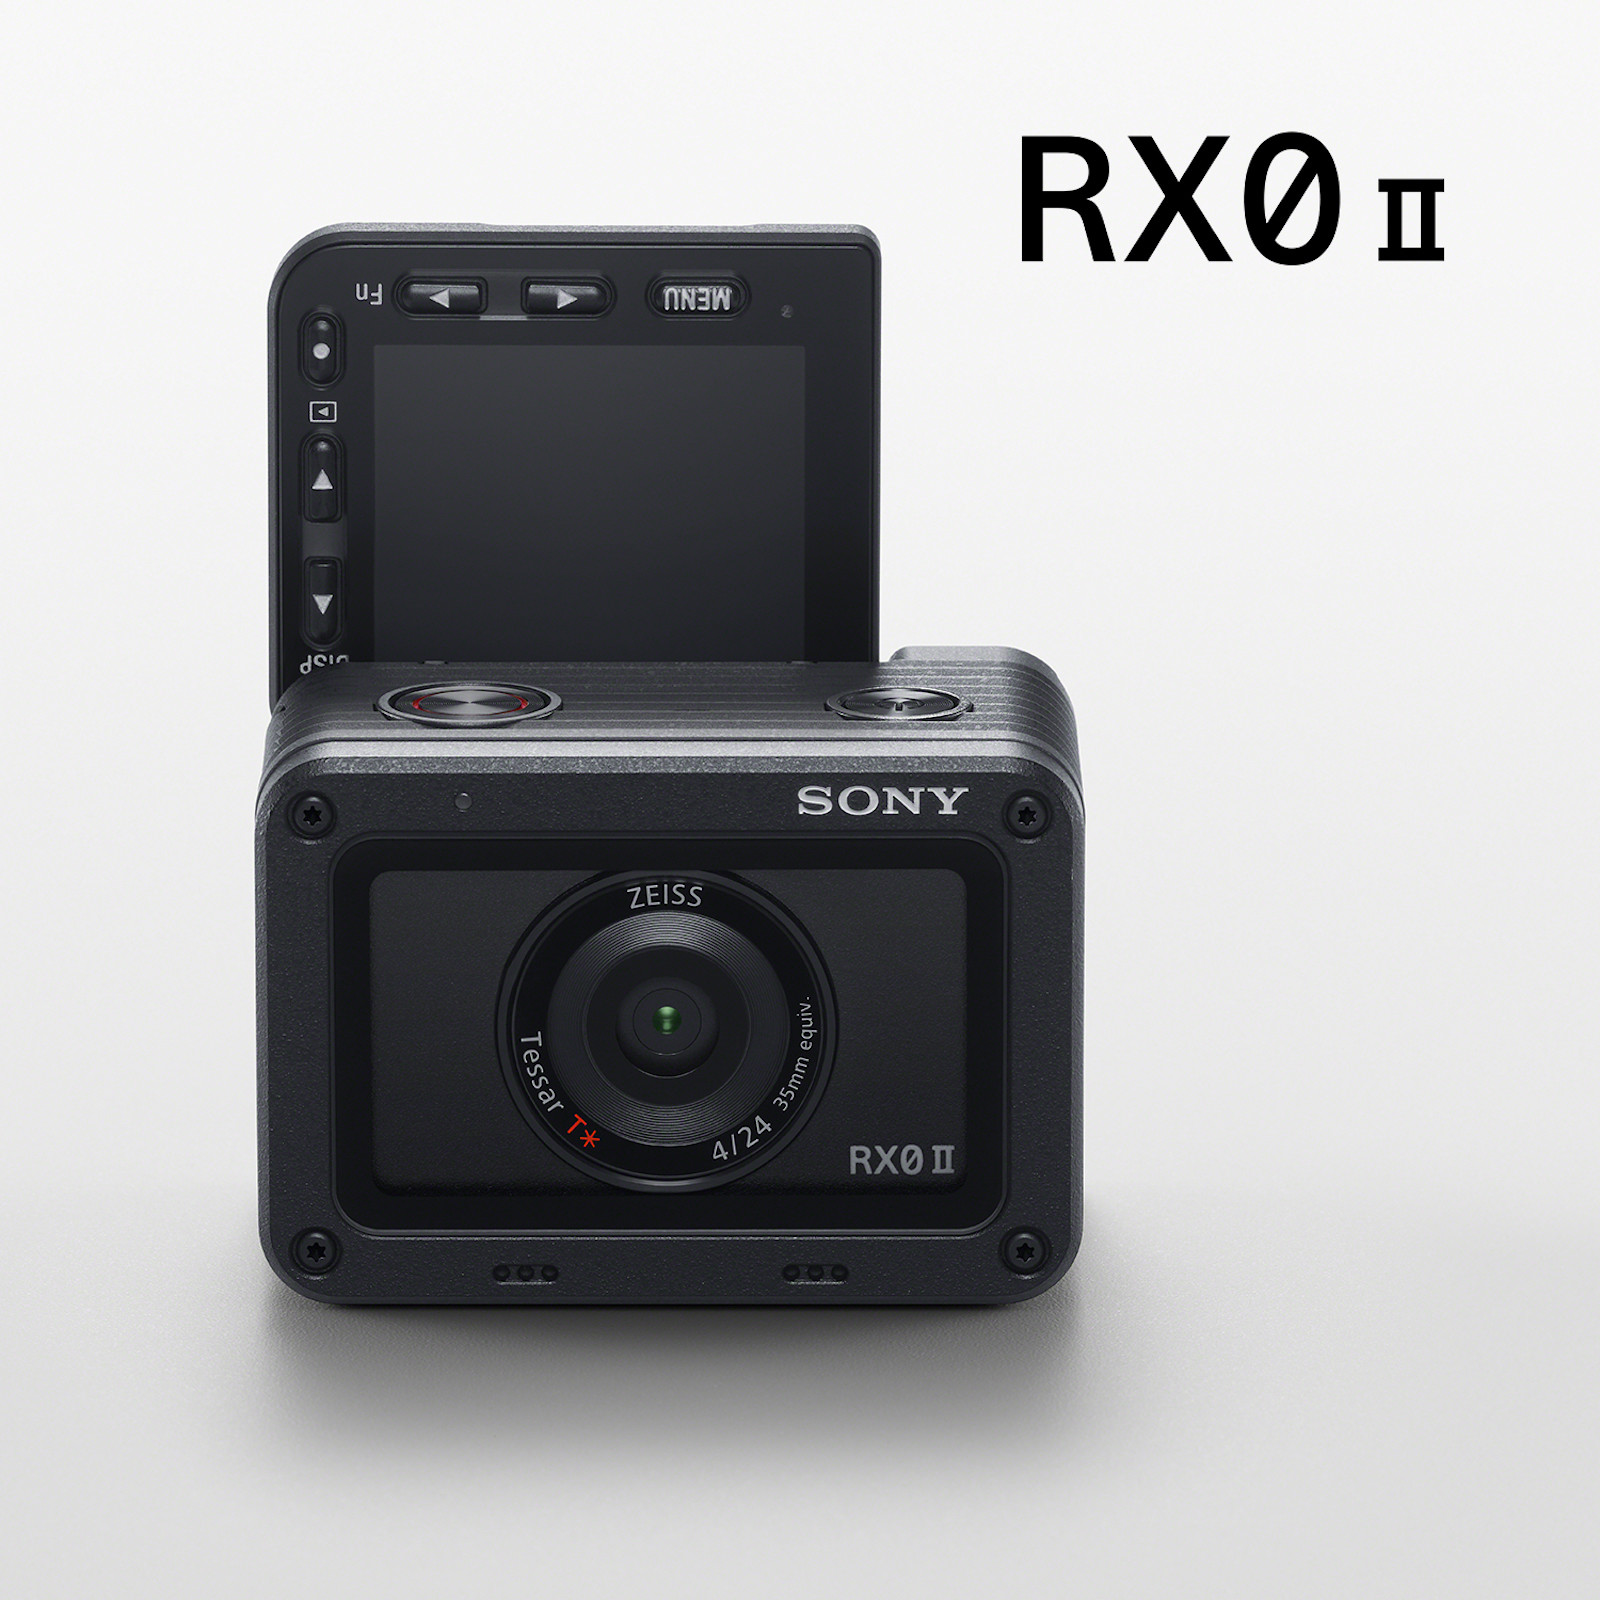 Sony Launches RXO II